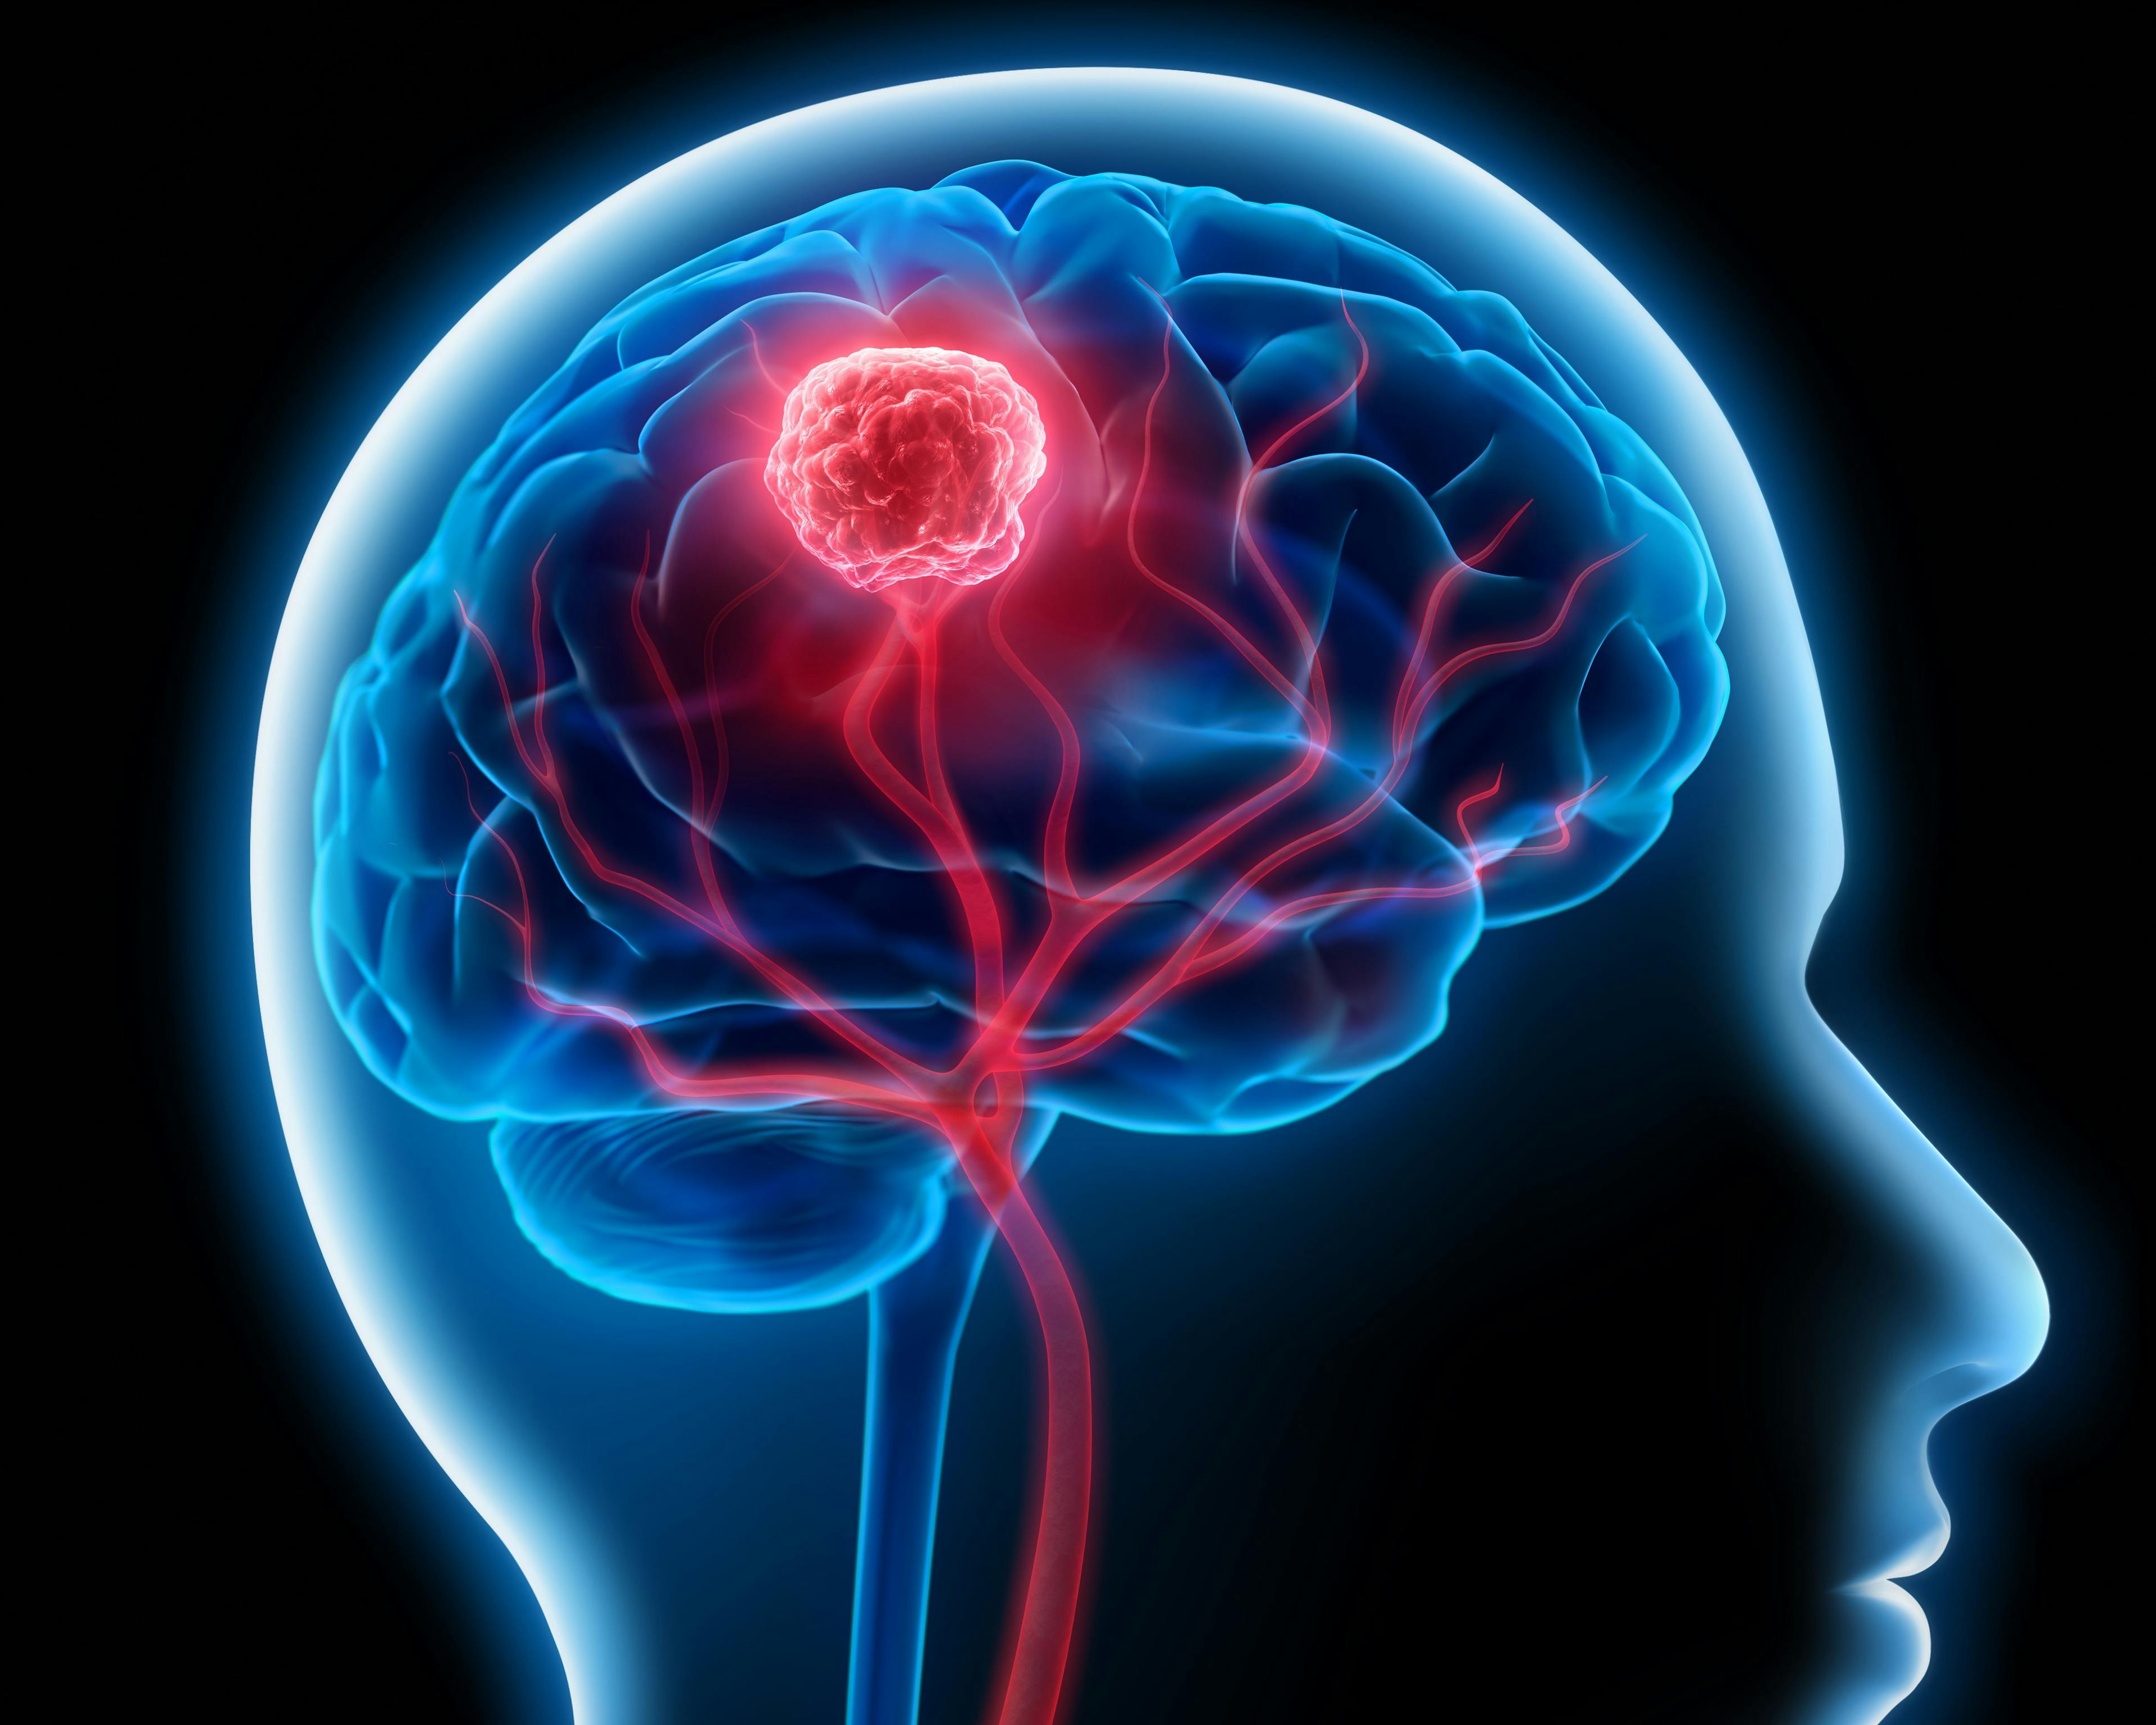 3D illustration of tumor in brain: © peterschreiber.media - stock.adobe.com